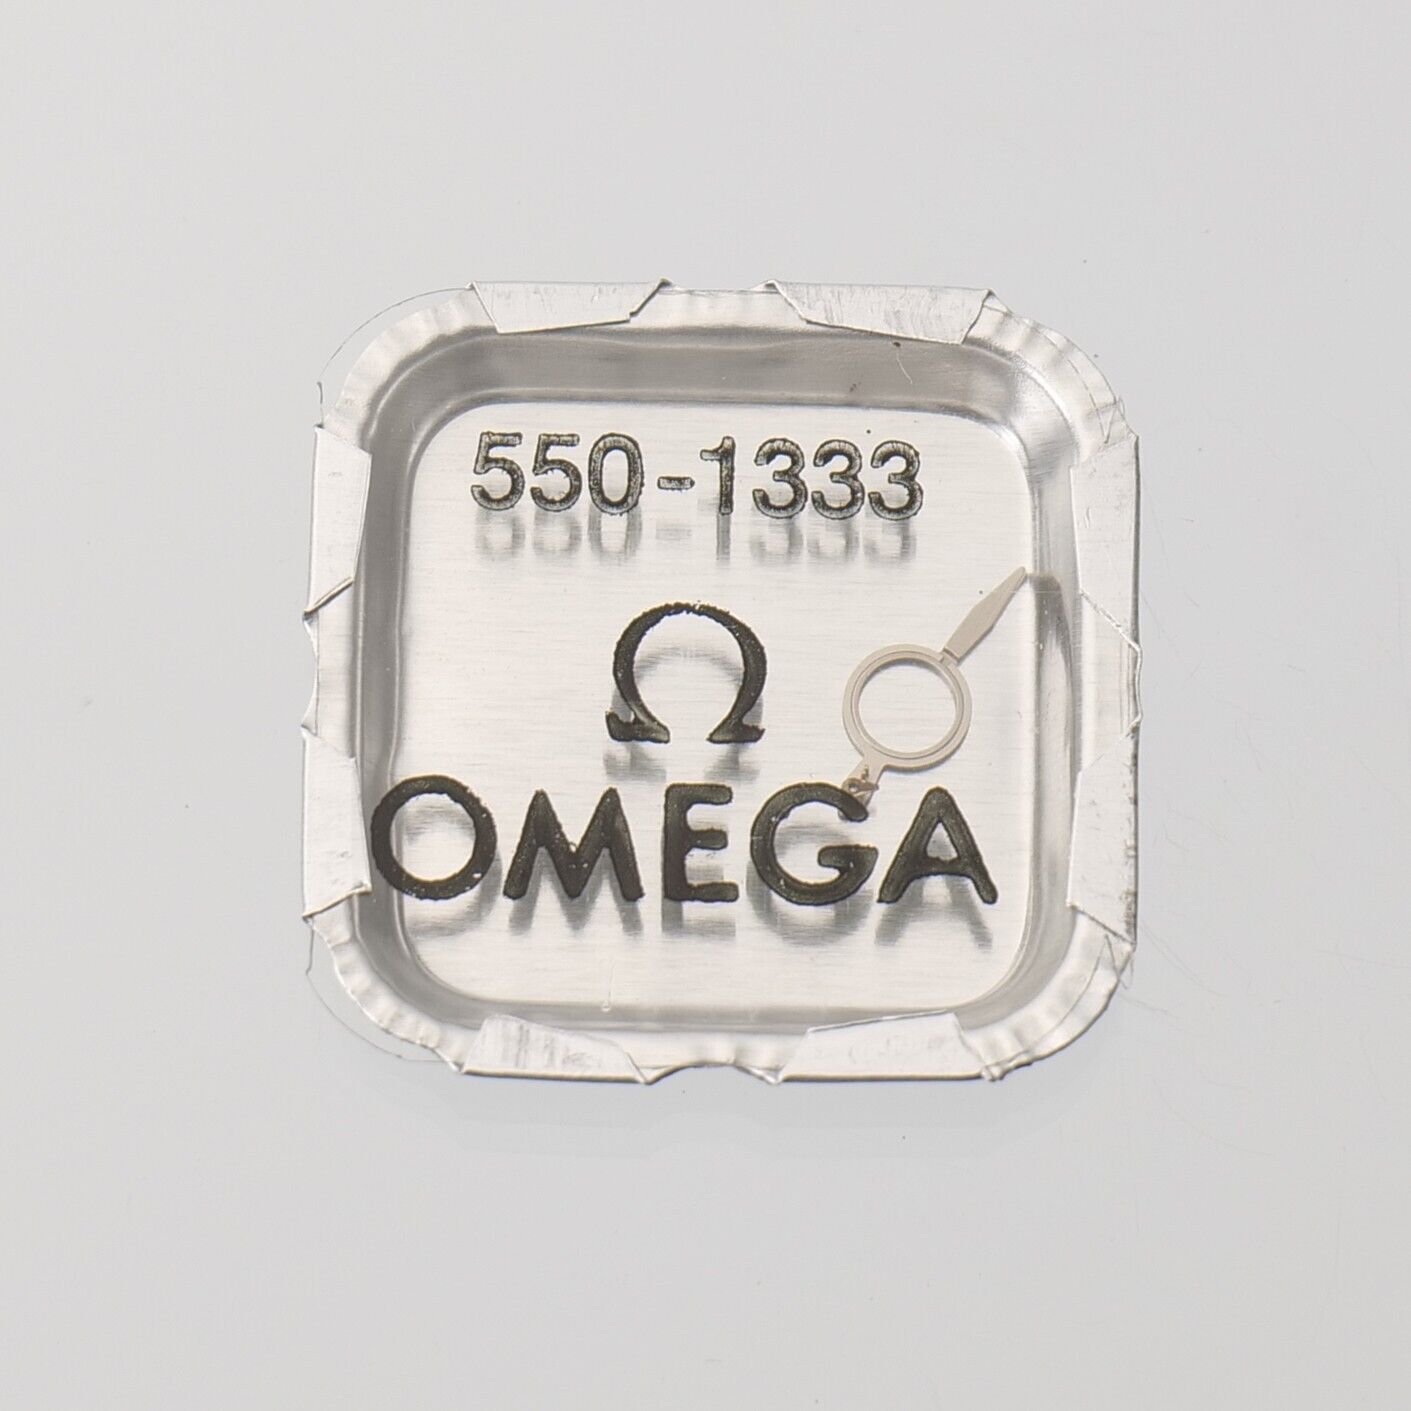 Genuine NOS OMEGA 550-1333 Regulator Watch Movement Part Watchmakers (C12D31)